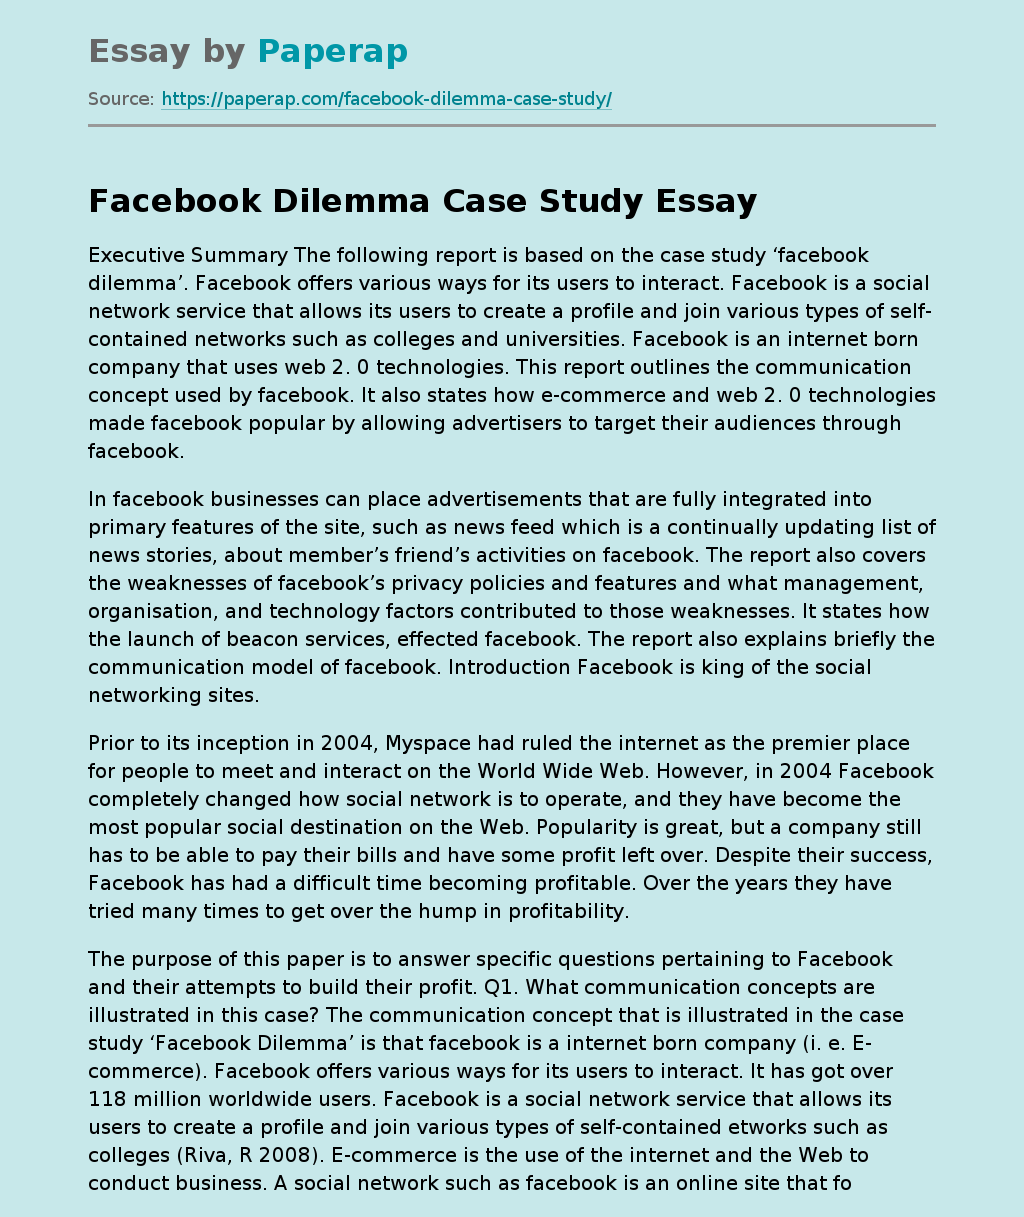 Facebook Dilemma Case Study